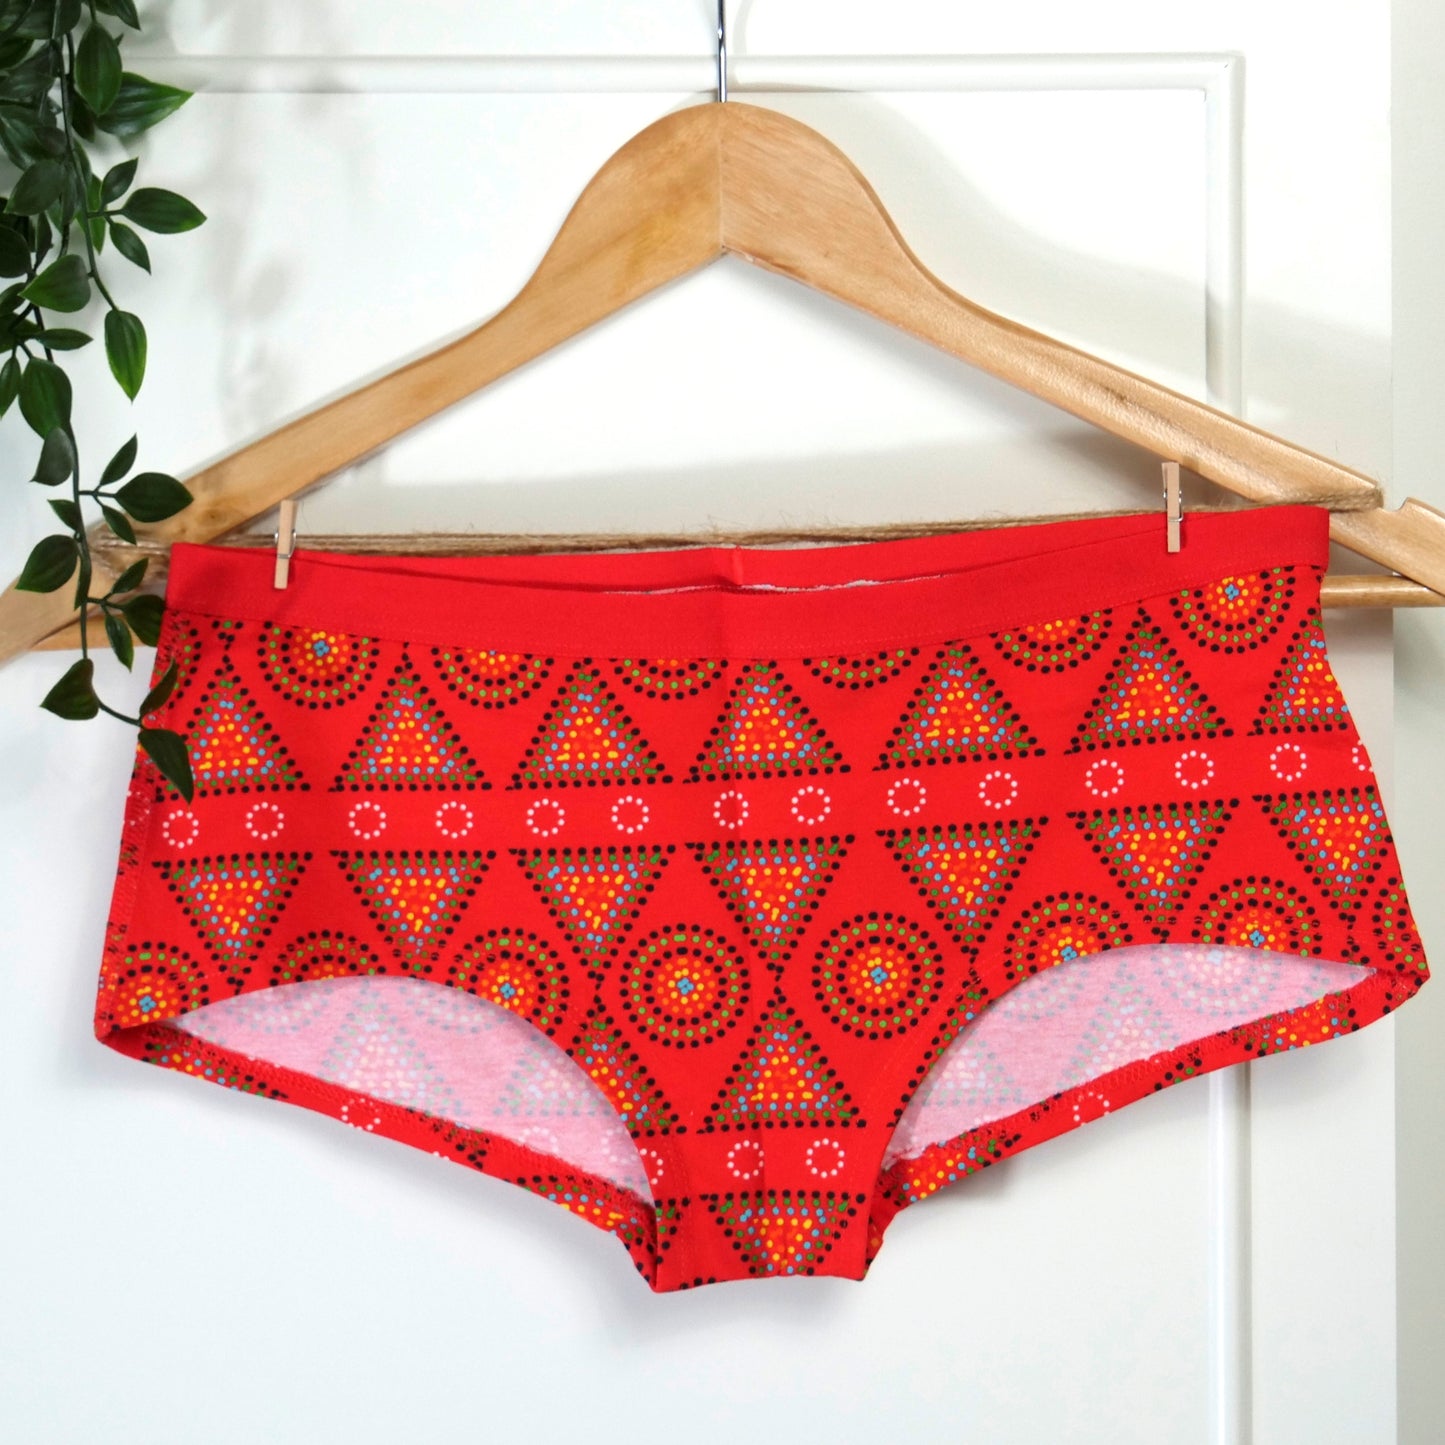 Women's organic cotton matching bralette and plain boy shorts set - Red Mara design